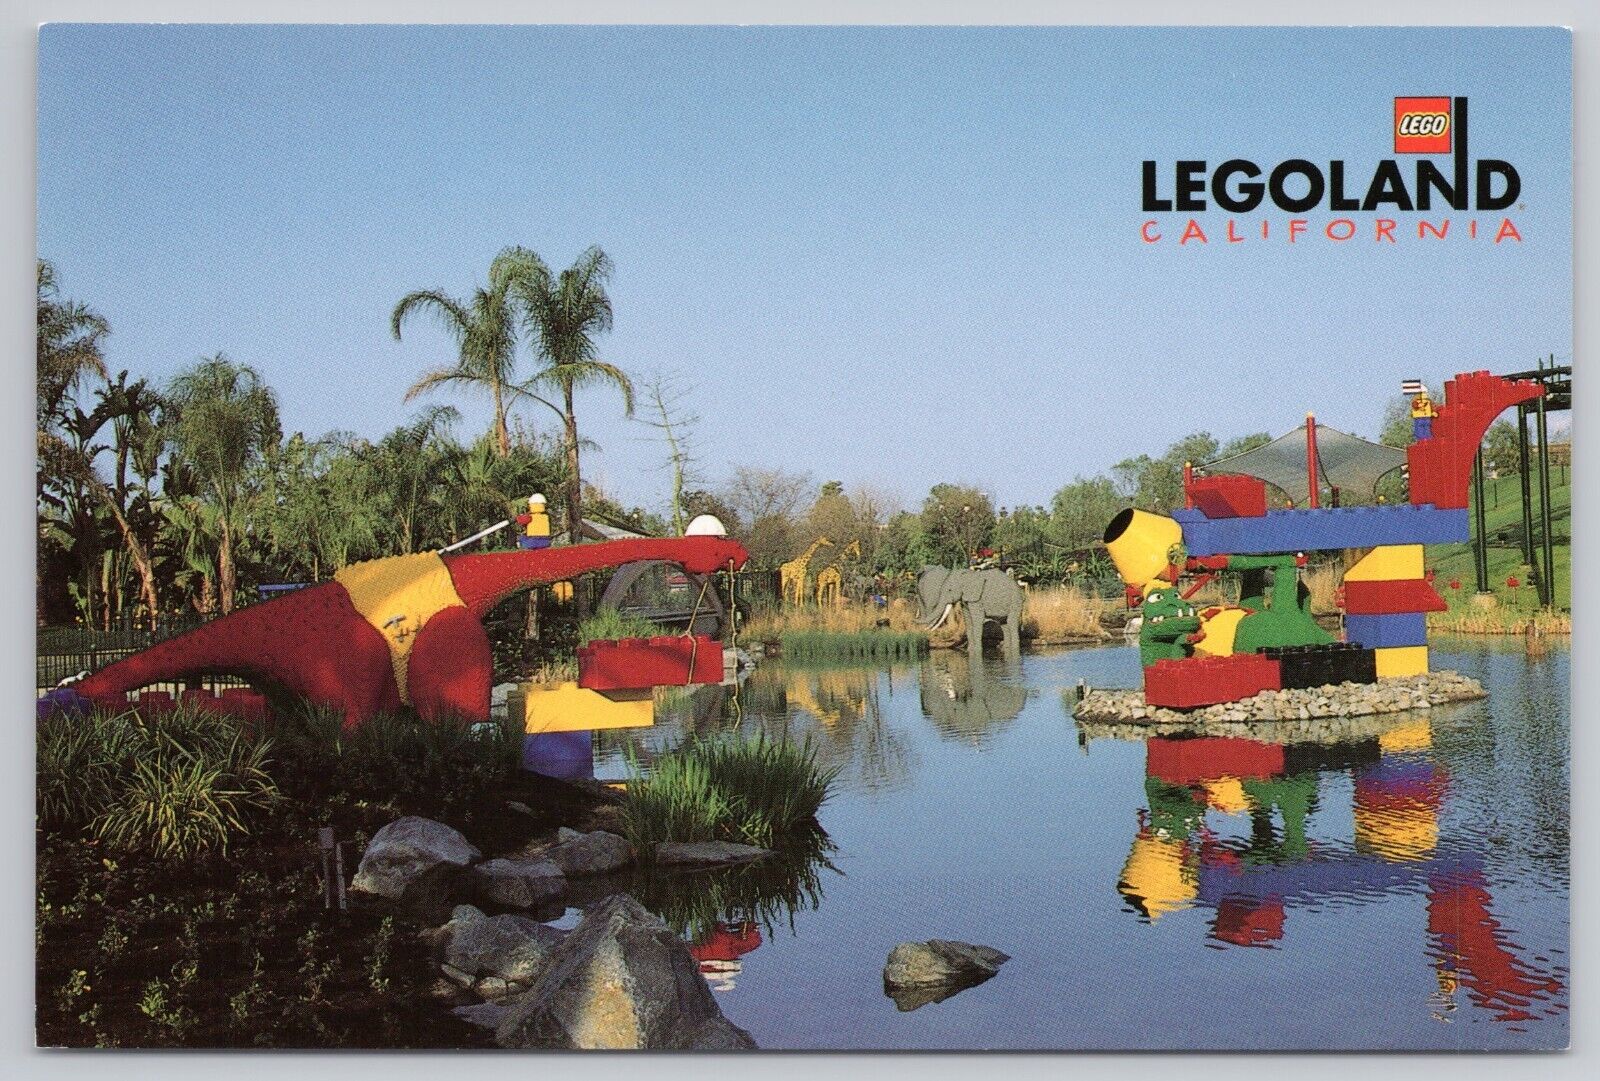 Carlsbad California, Legoland Theme Park, Dinosaurs, Vintage Postcard